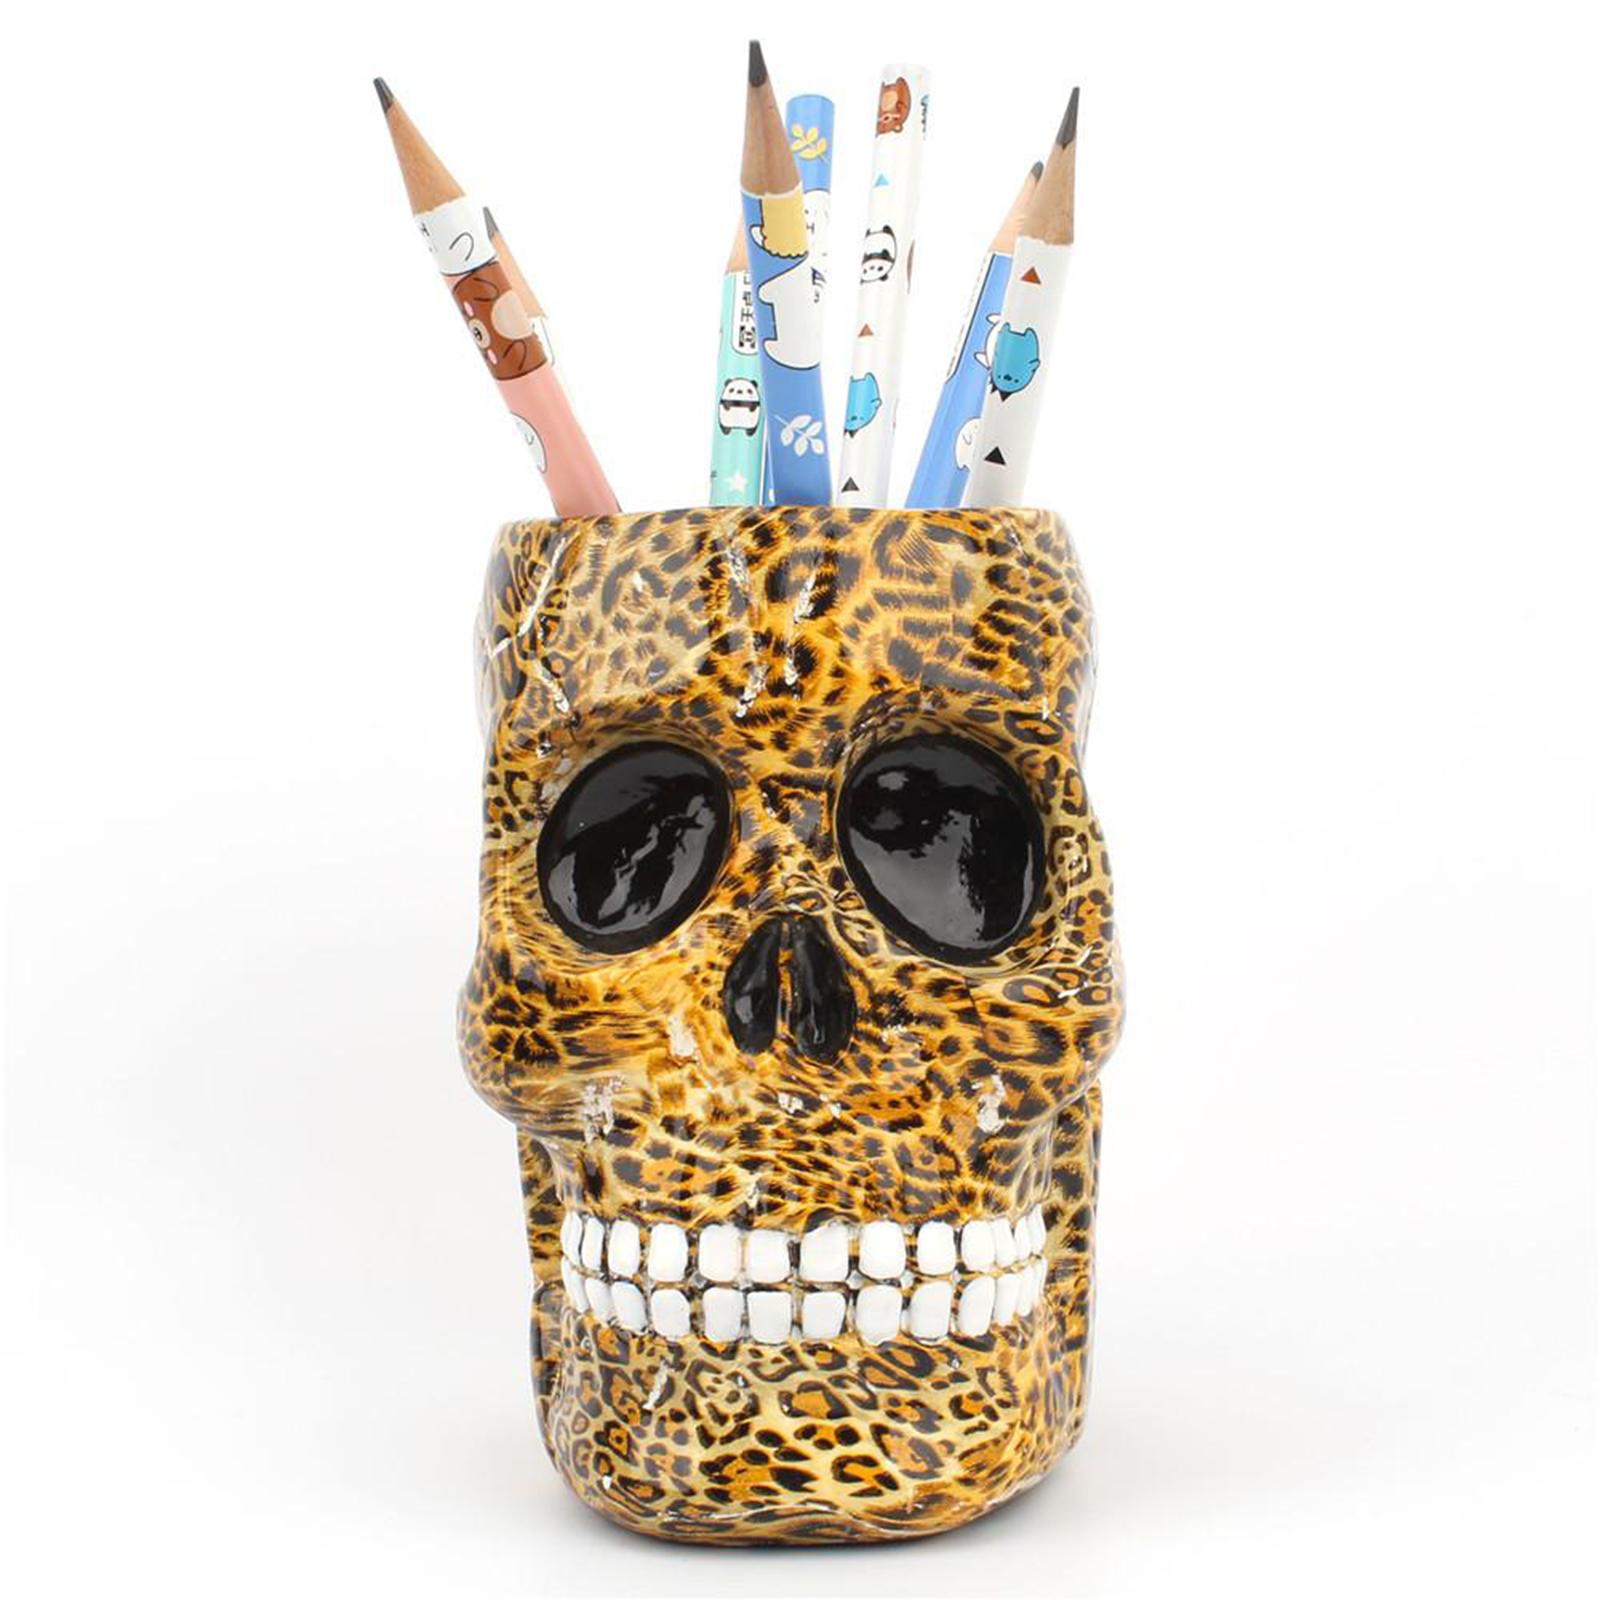 Skull Desk Organizer Pencil Holder Cosmetic Makeup Brushes Display Rack A